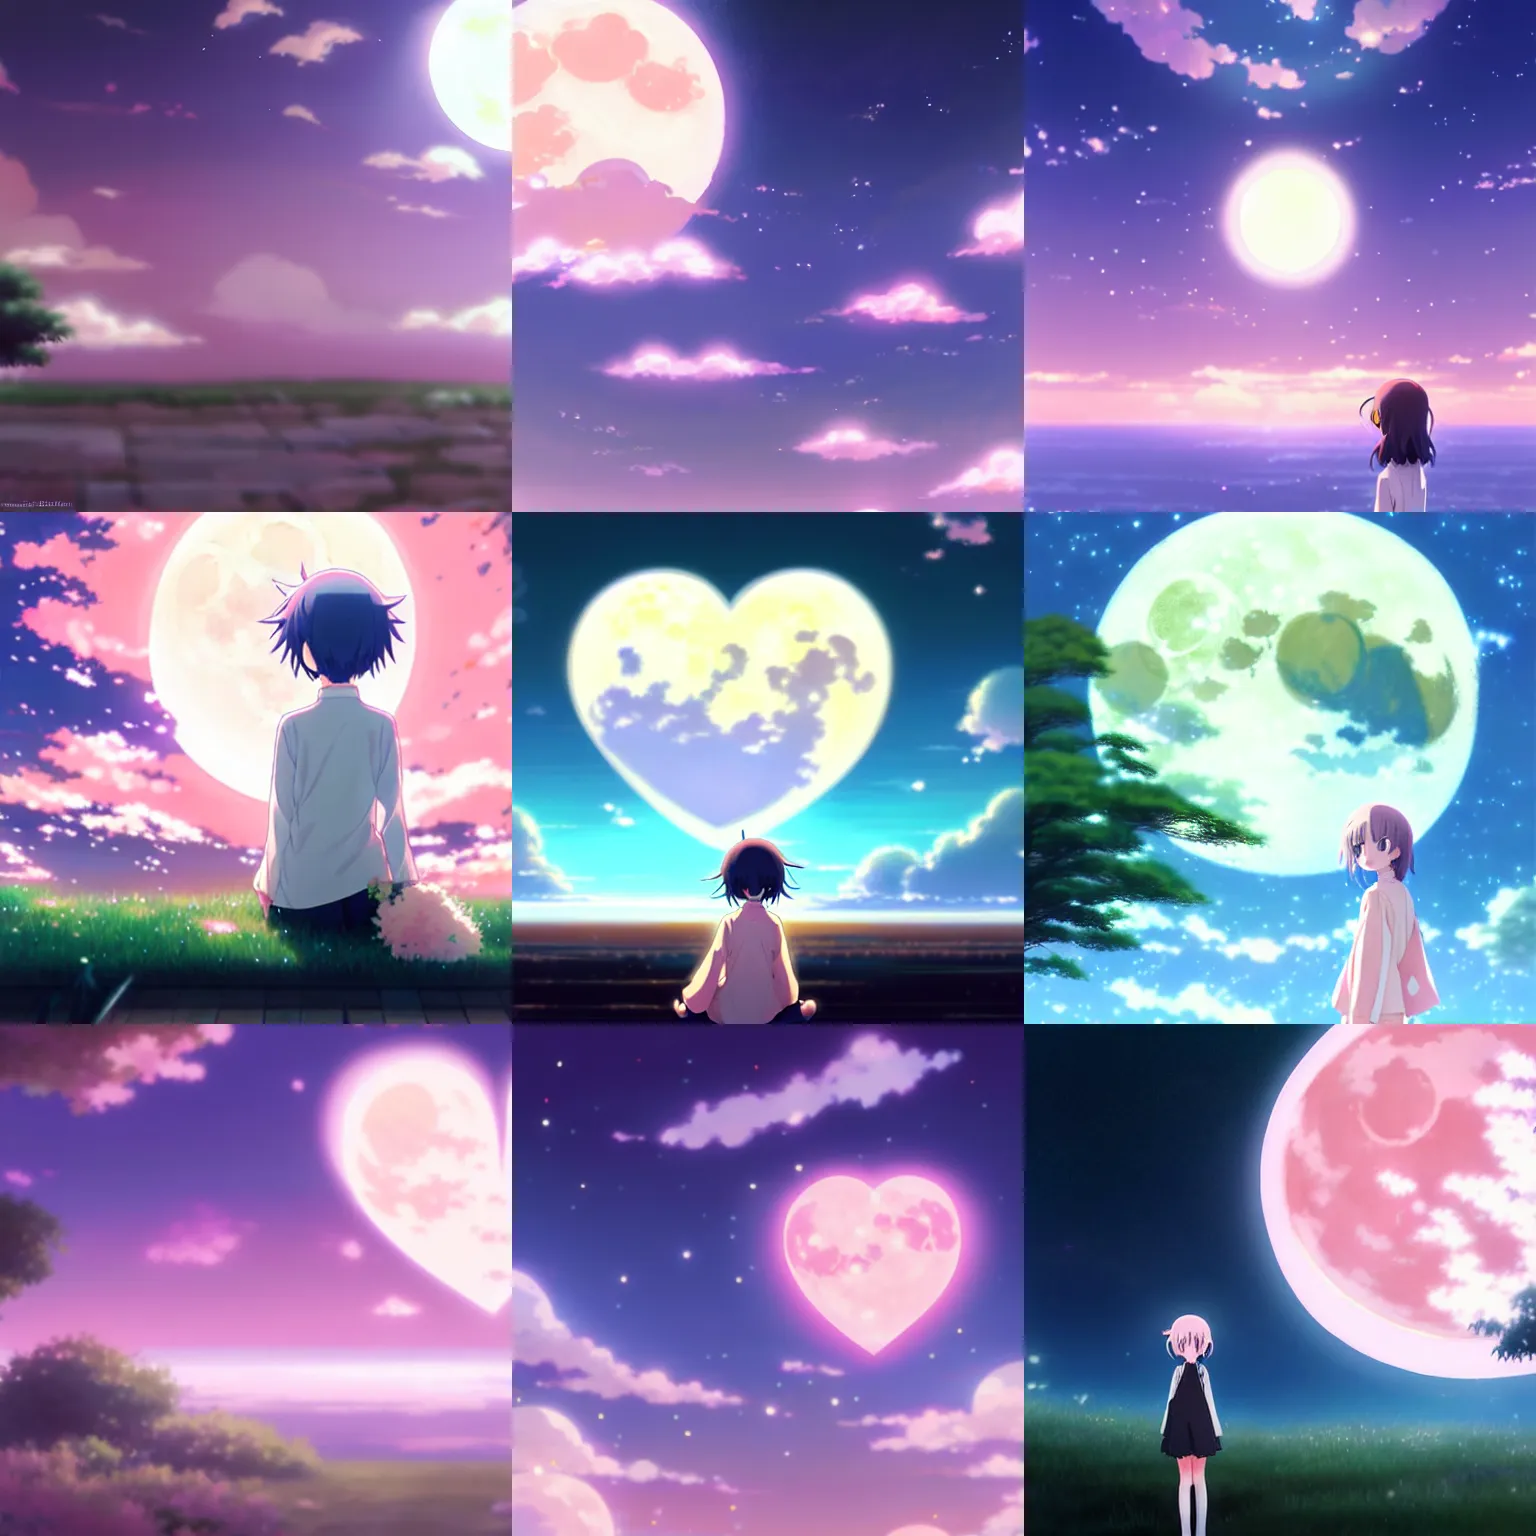 Prompt: a light pink heart - shaped moon, anime art, by makoto shinkai